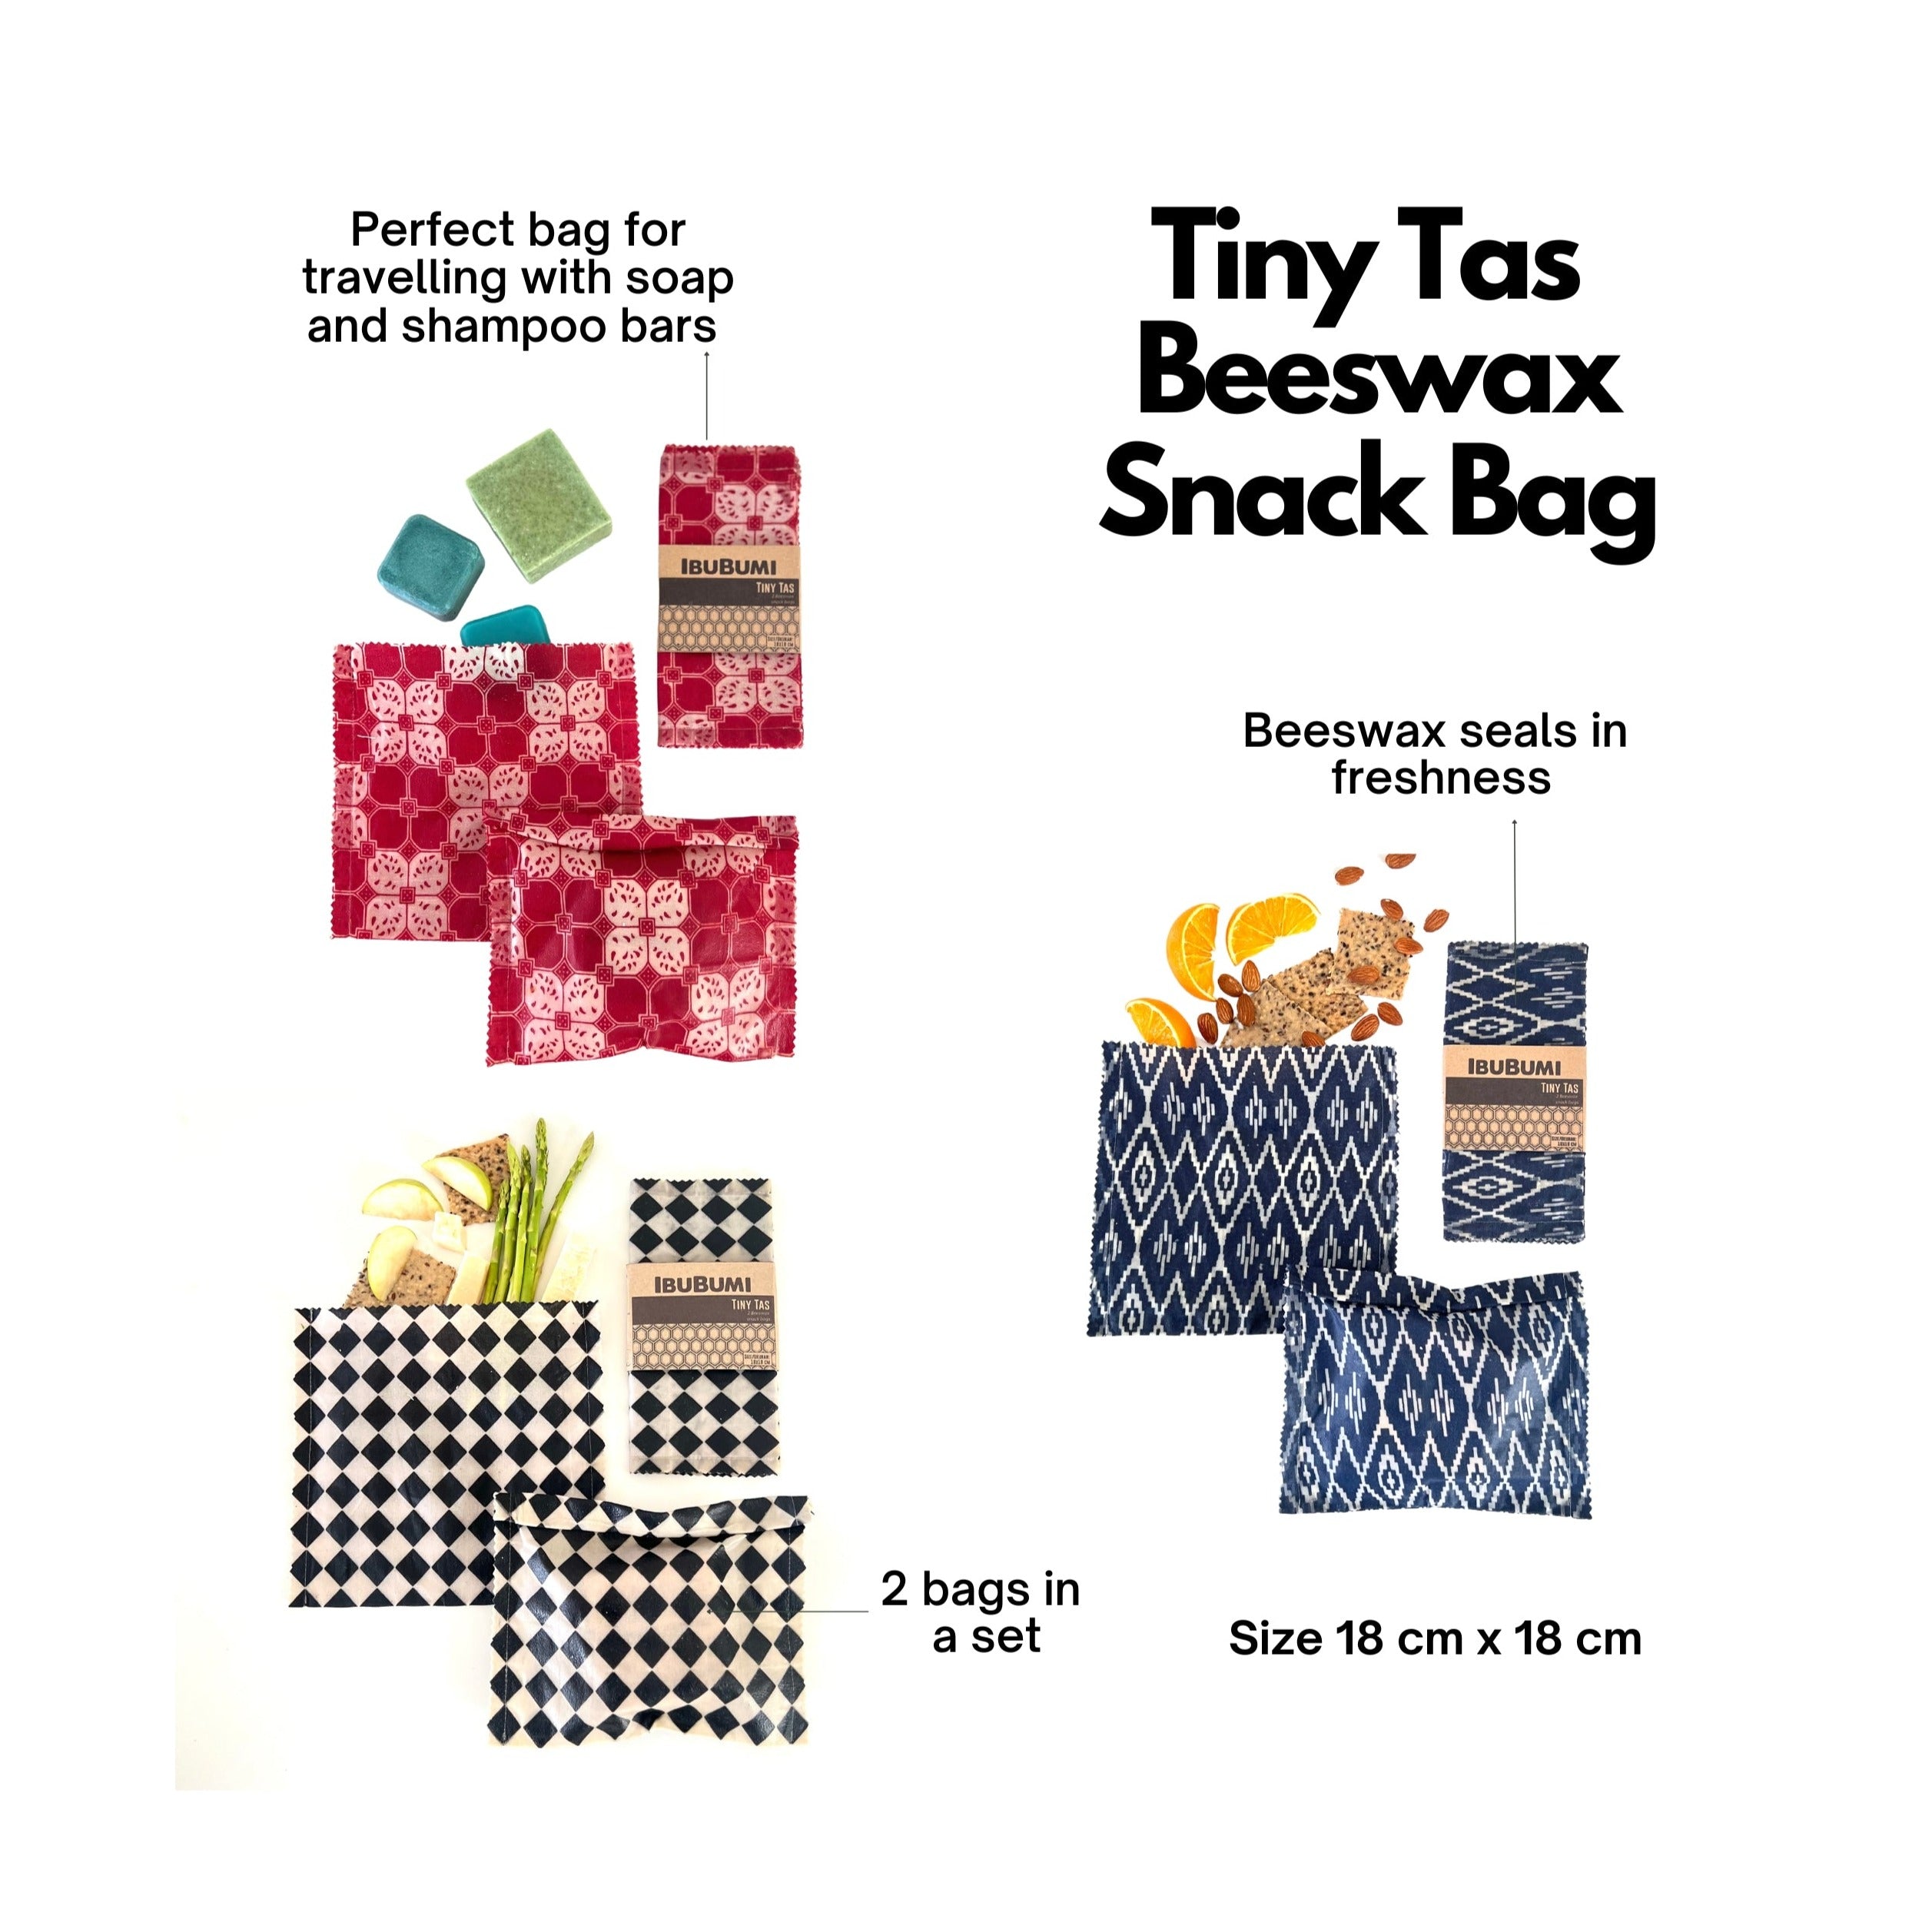 Reusable Beeswax Snack Bags - Tiny Tas